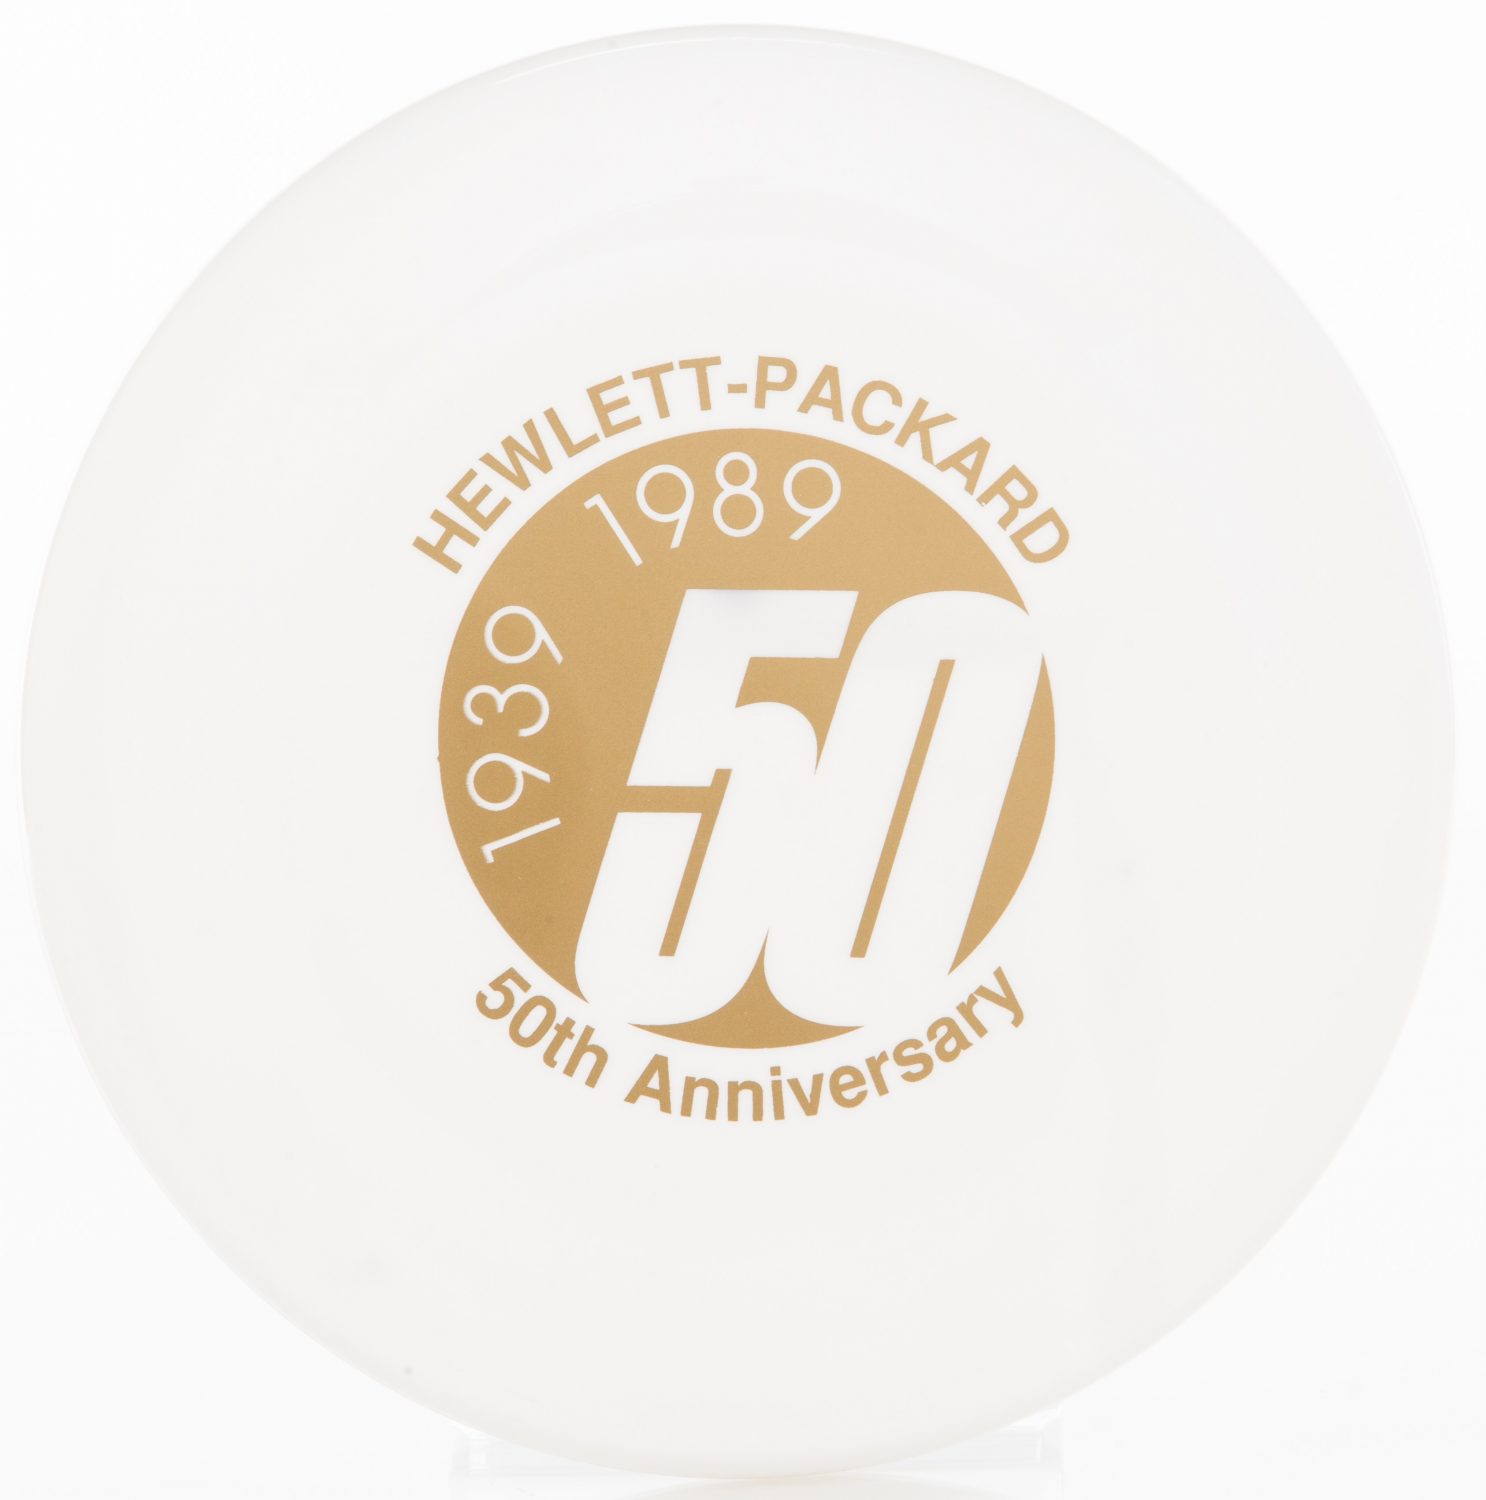 A frisbee celebrating Hewlett-Packard's 50th anniversary.